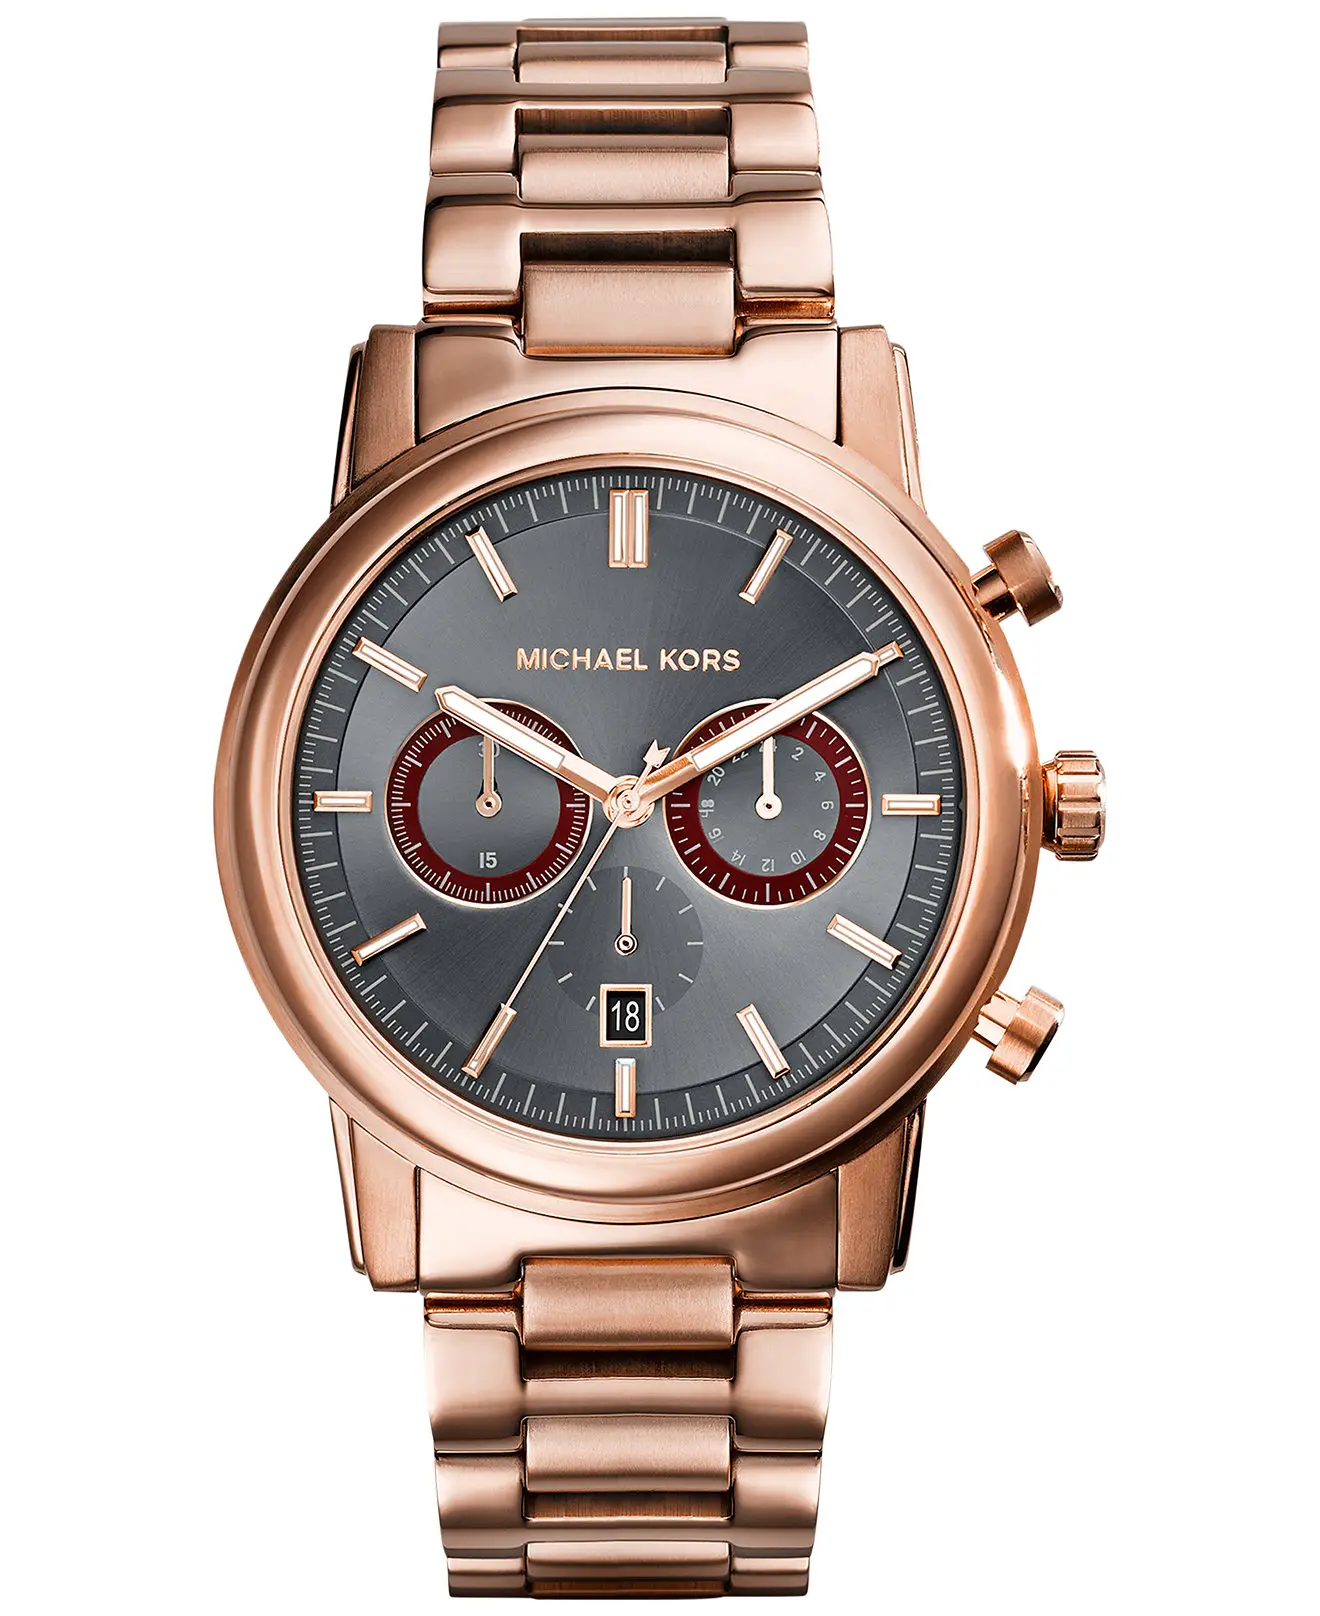 7 Most Popular Men's Michael Kors Watches - The Watch Blog